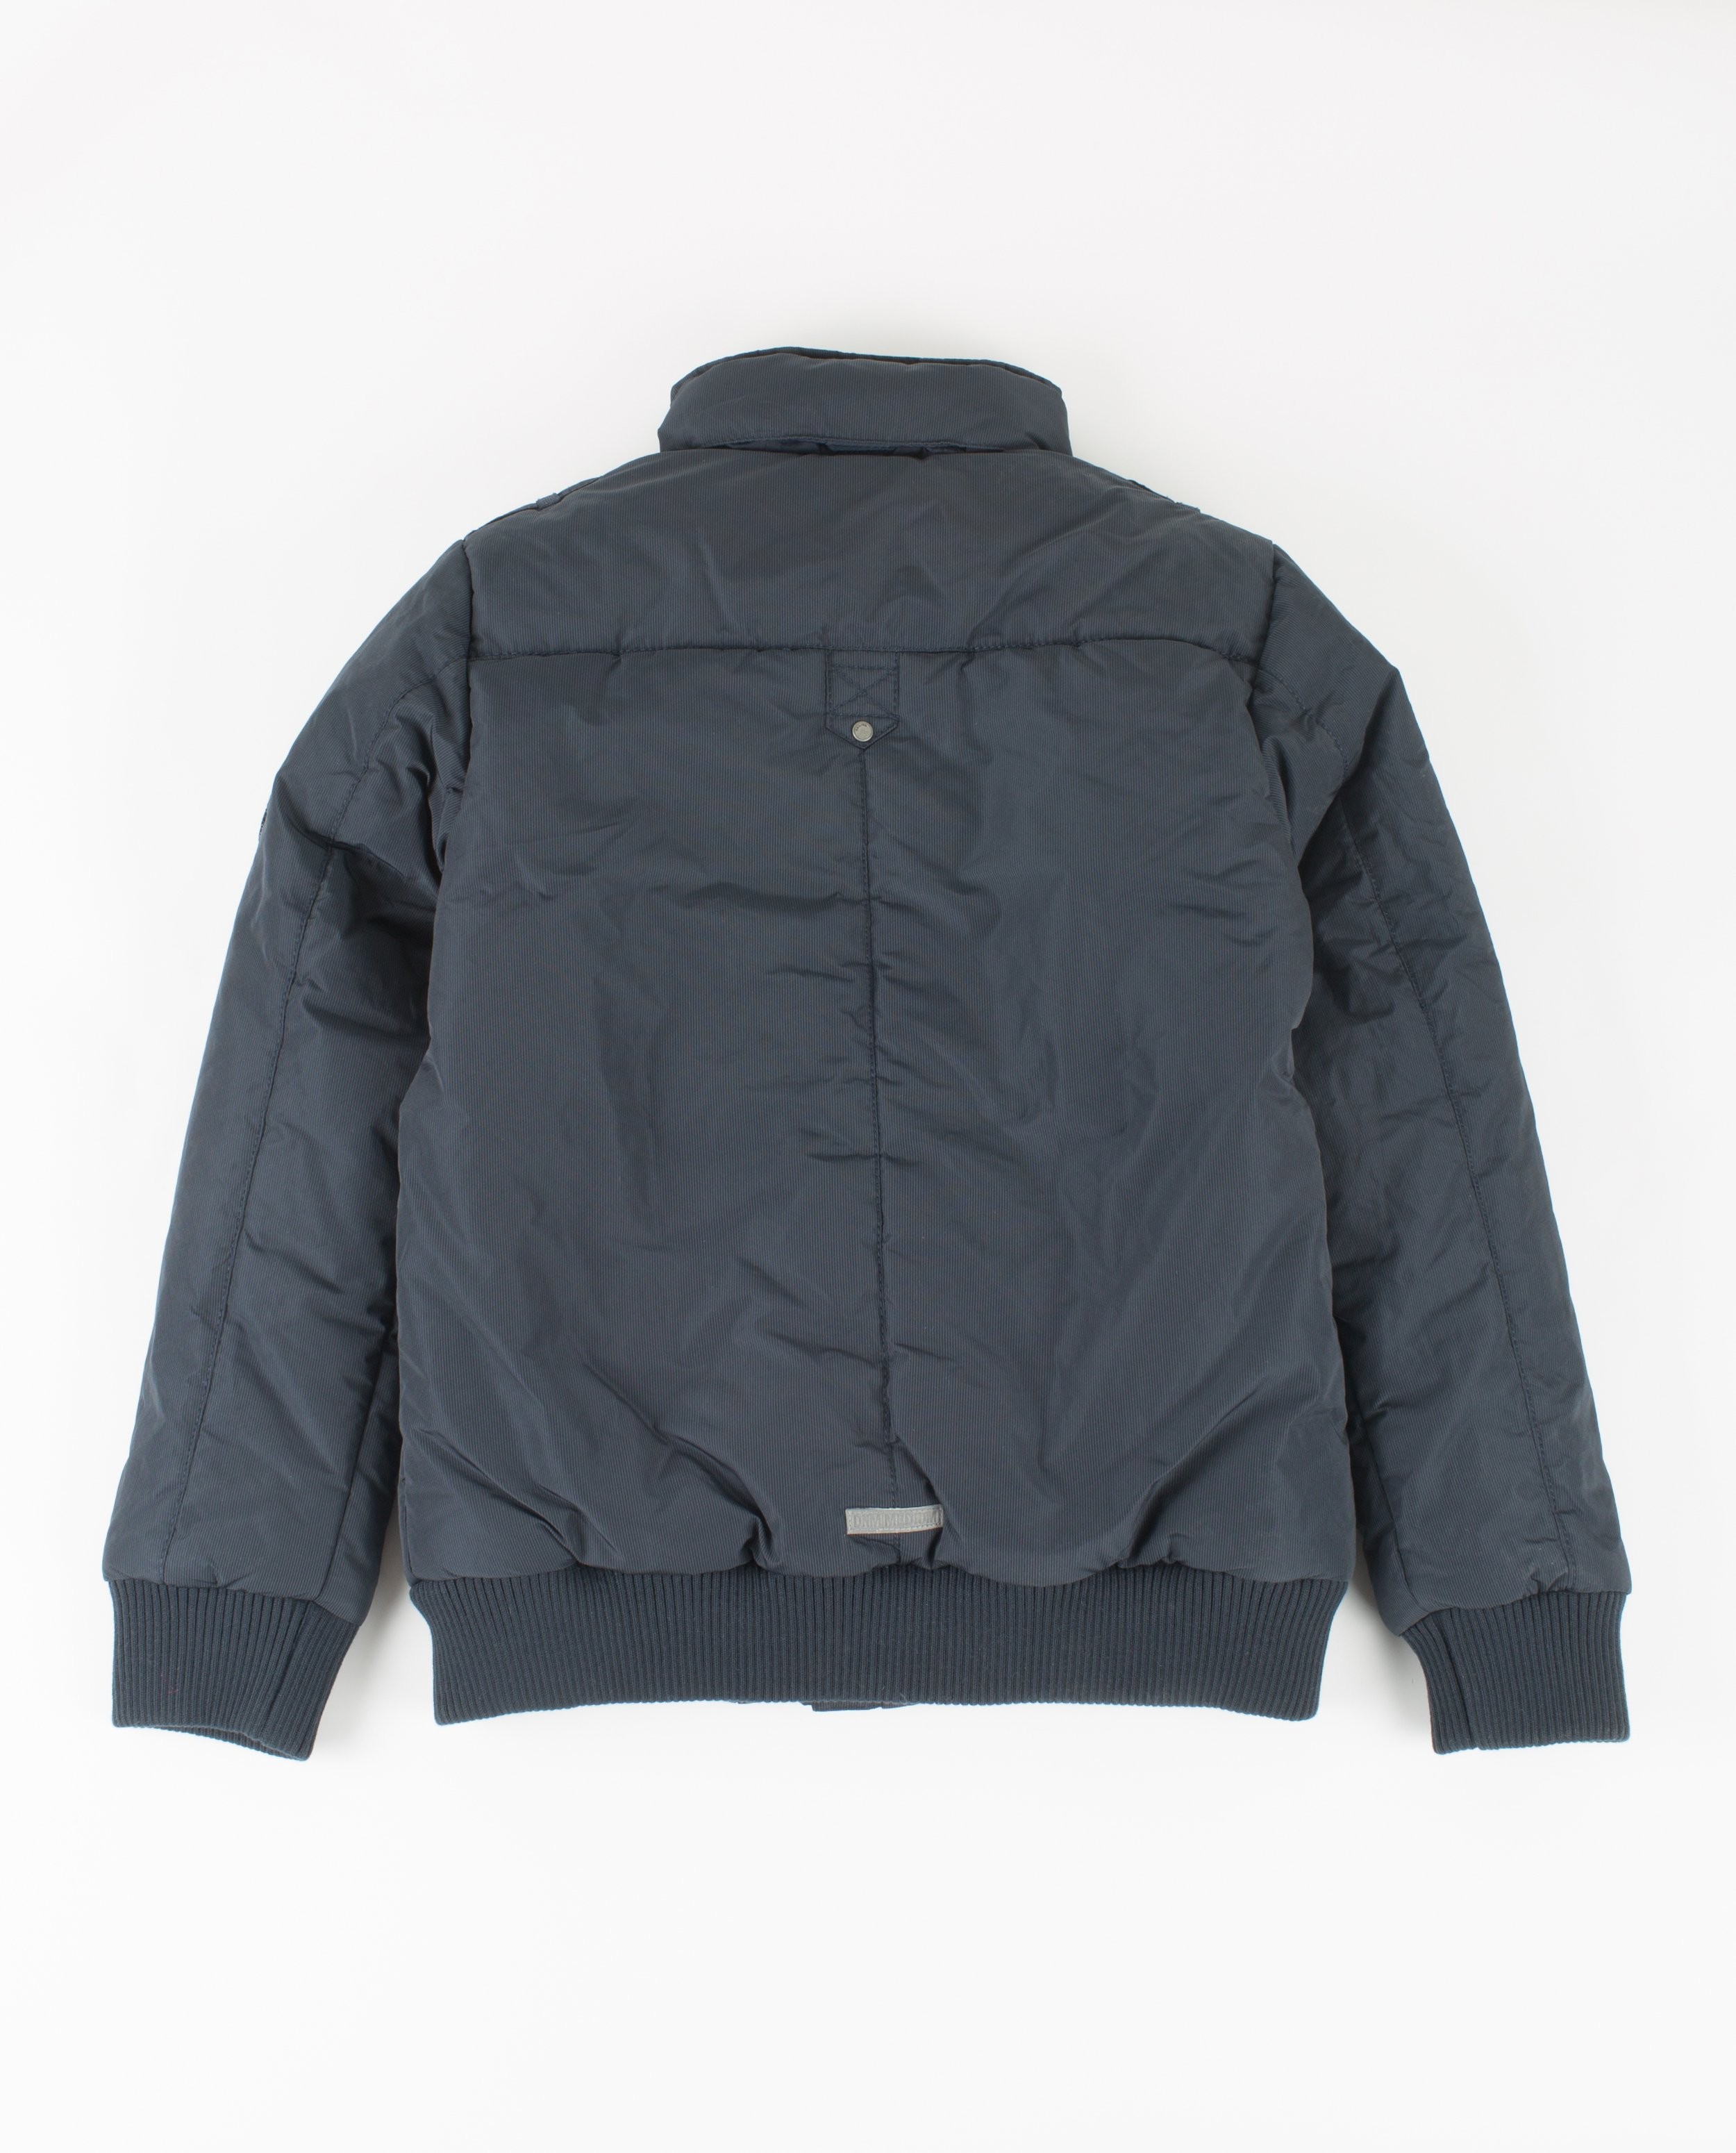 Manteaux - Donkerblauwe jas